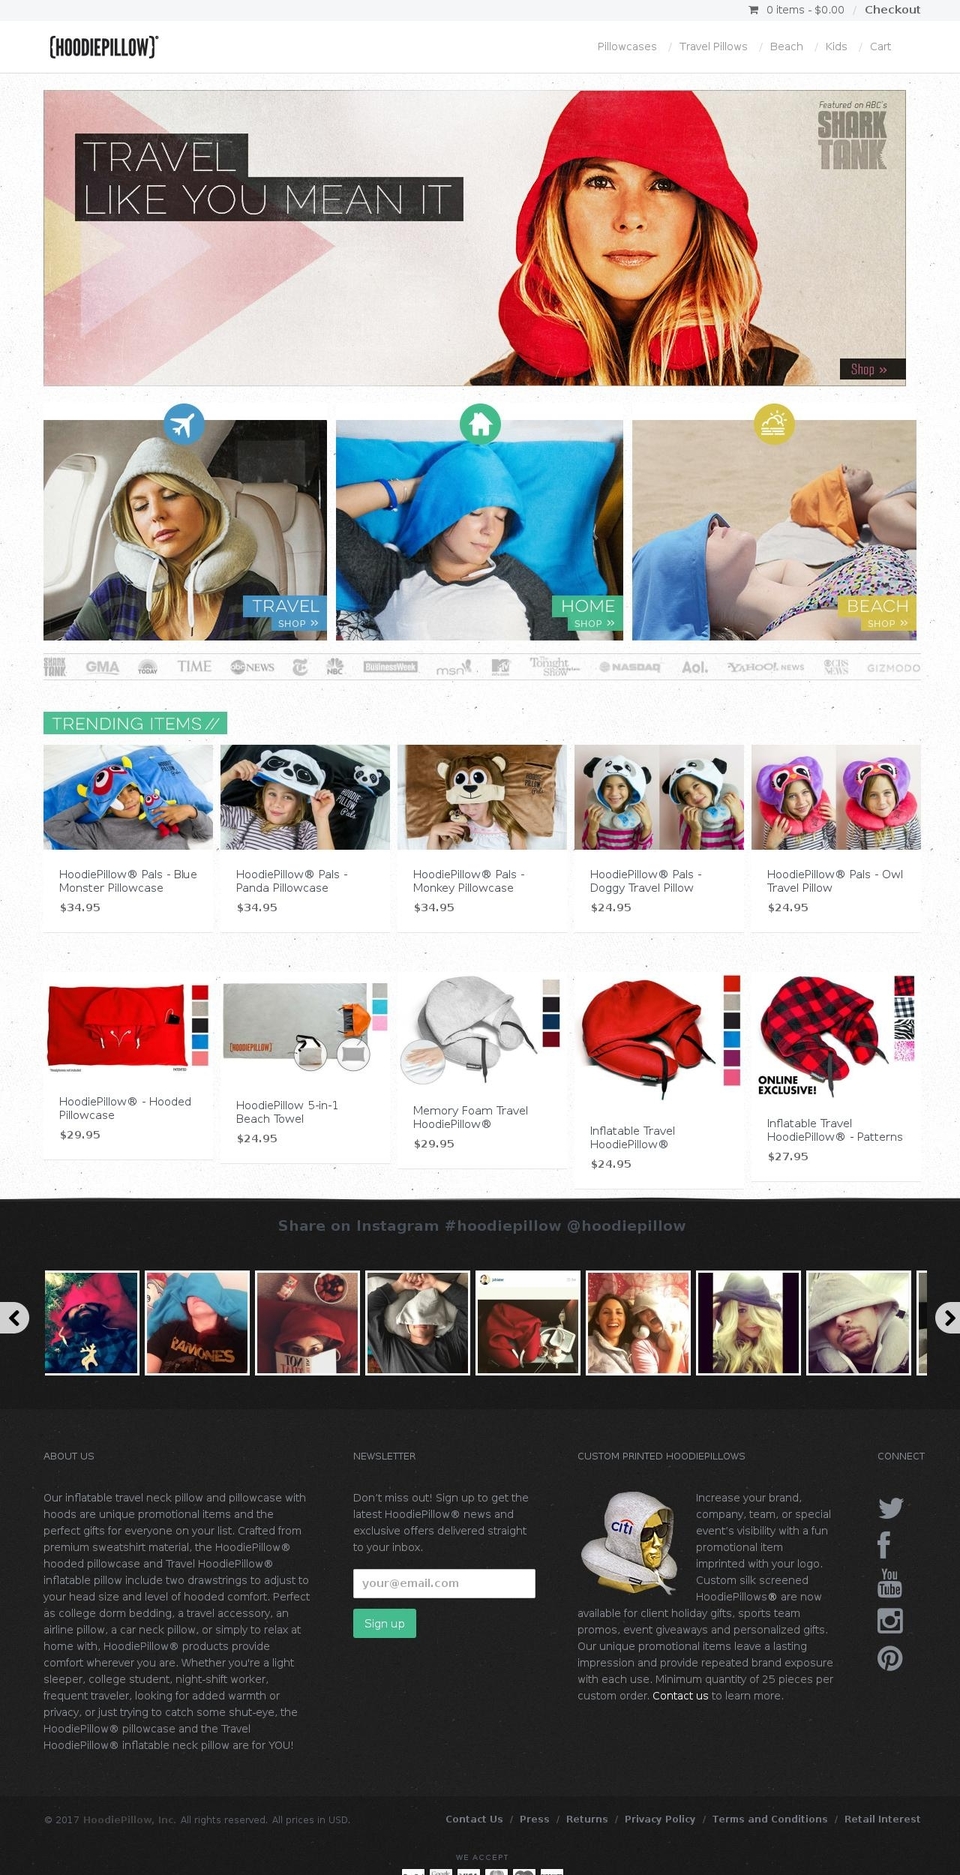 pillowhoody.com shopify website screenshot